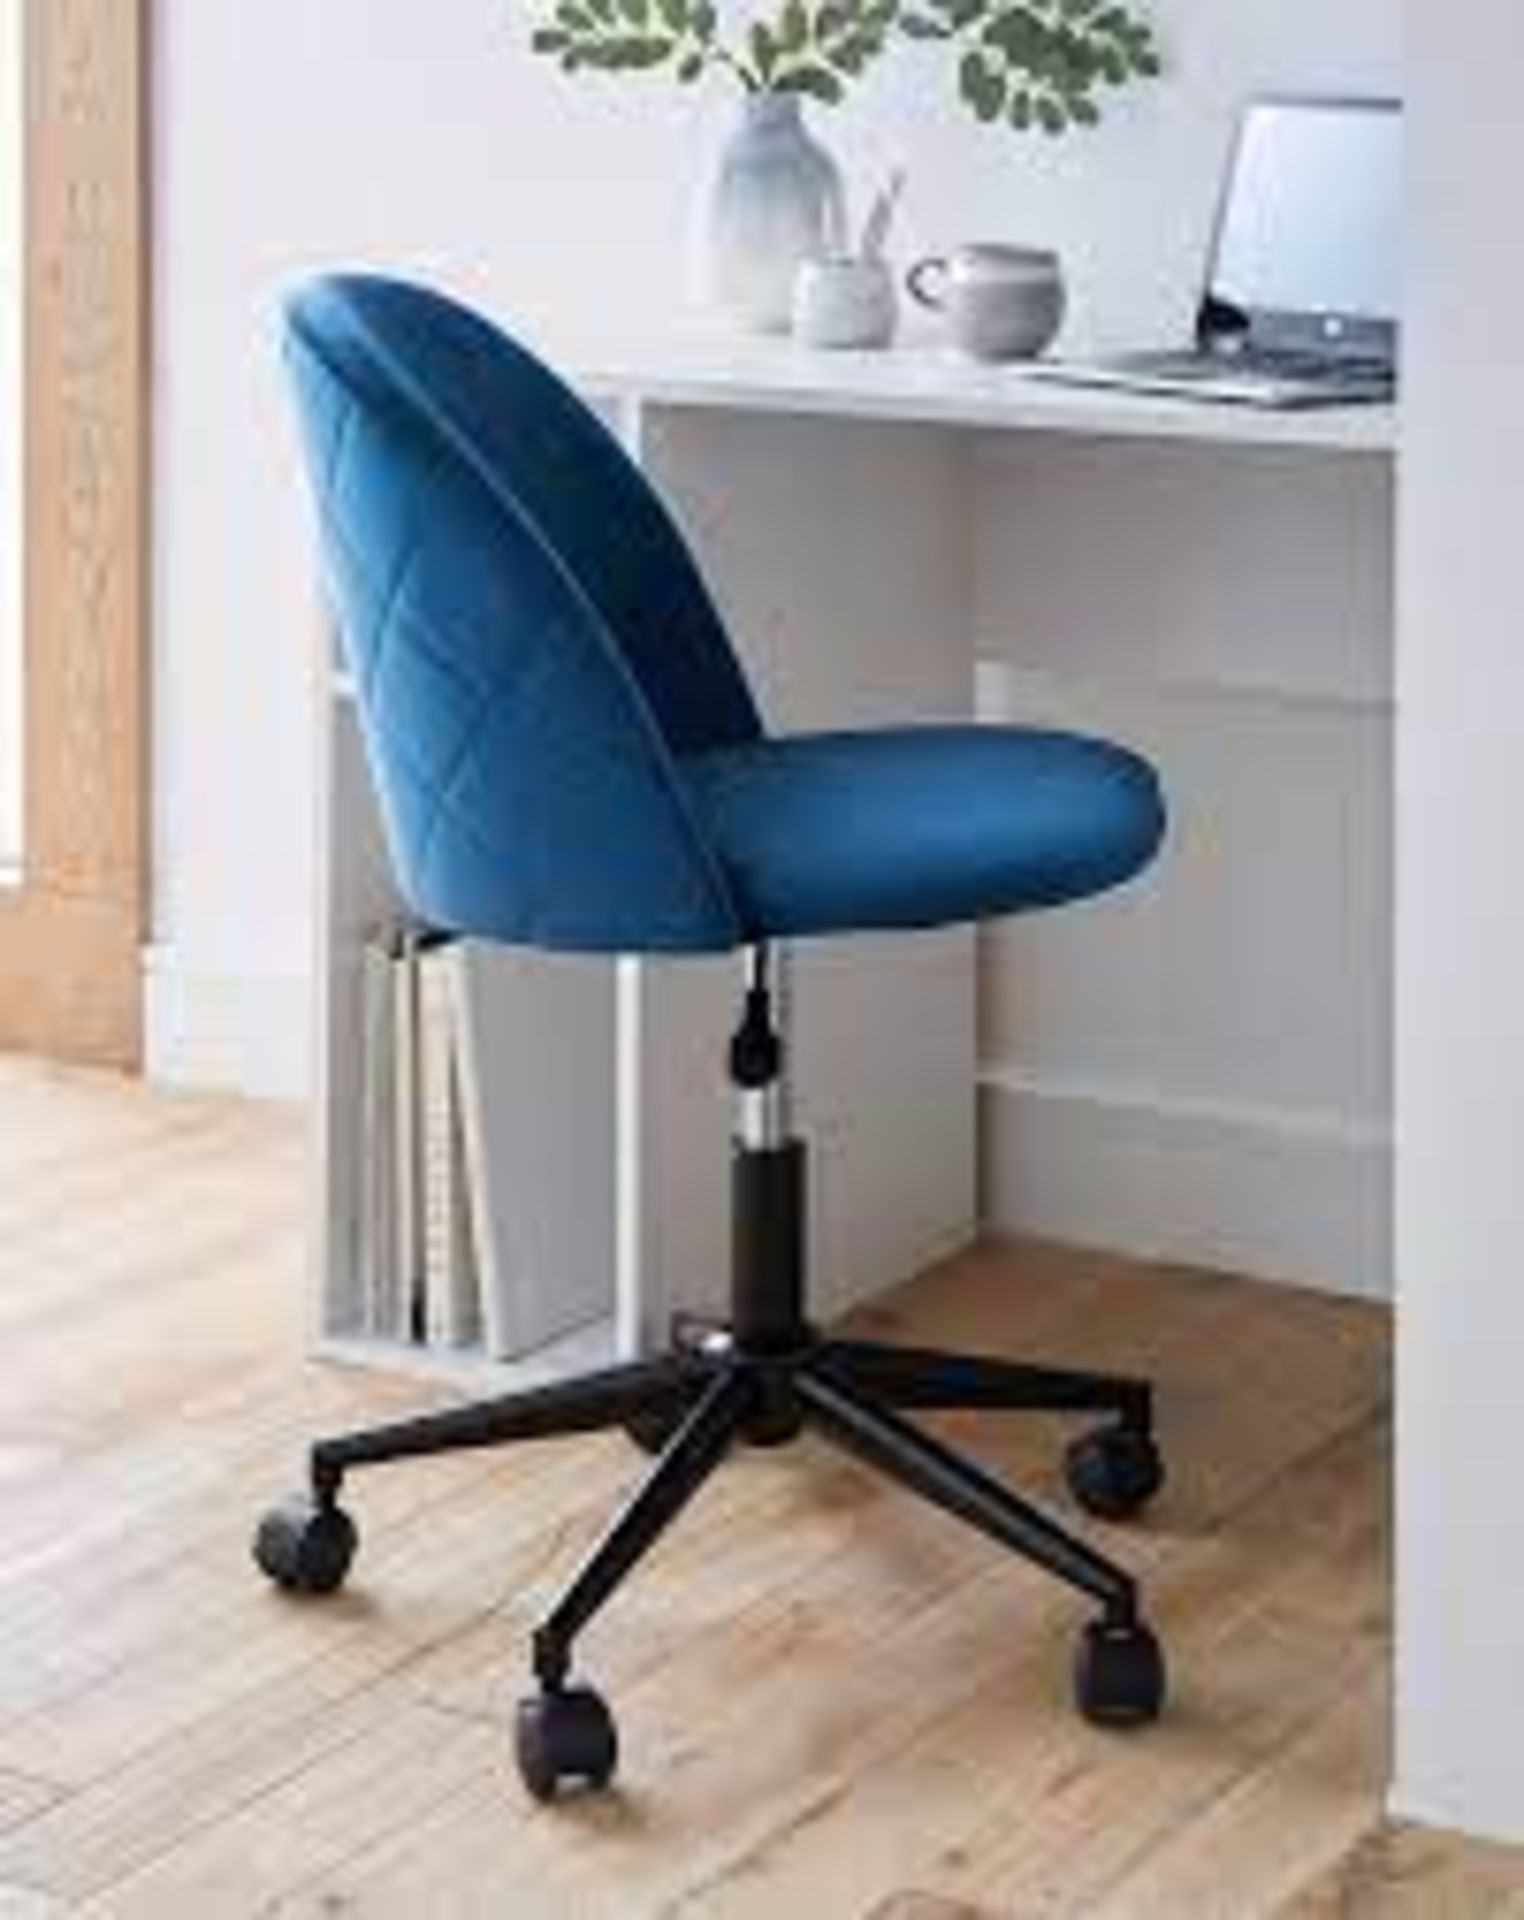 Brand New Luxry Klara Office Chair Navy r4-4, The Klara Office Chair is a luxurious and elegant